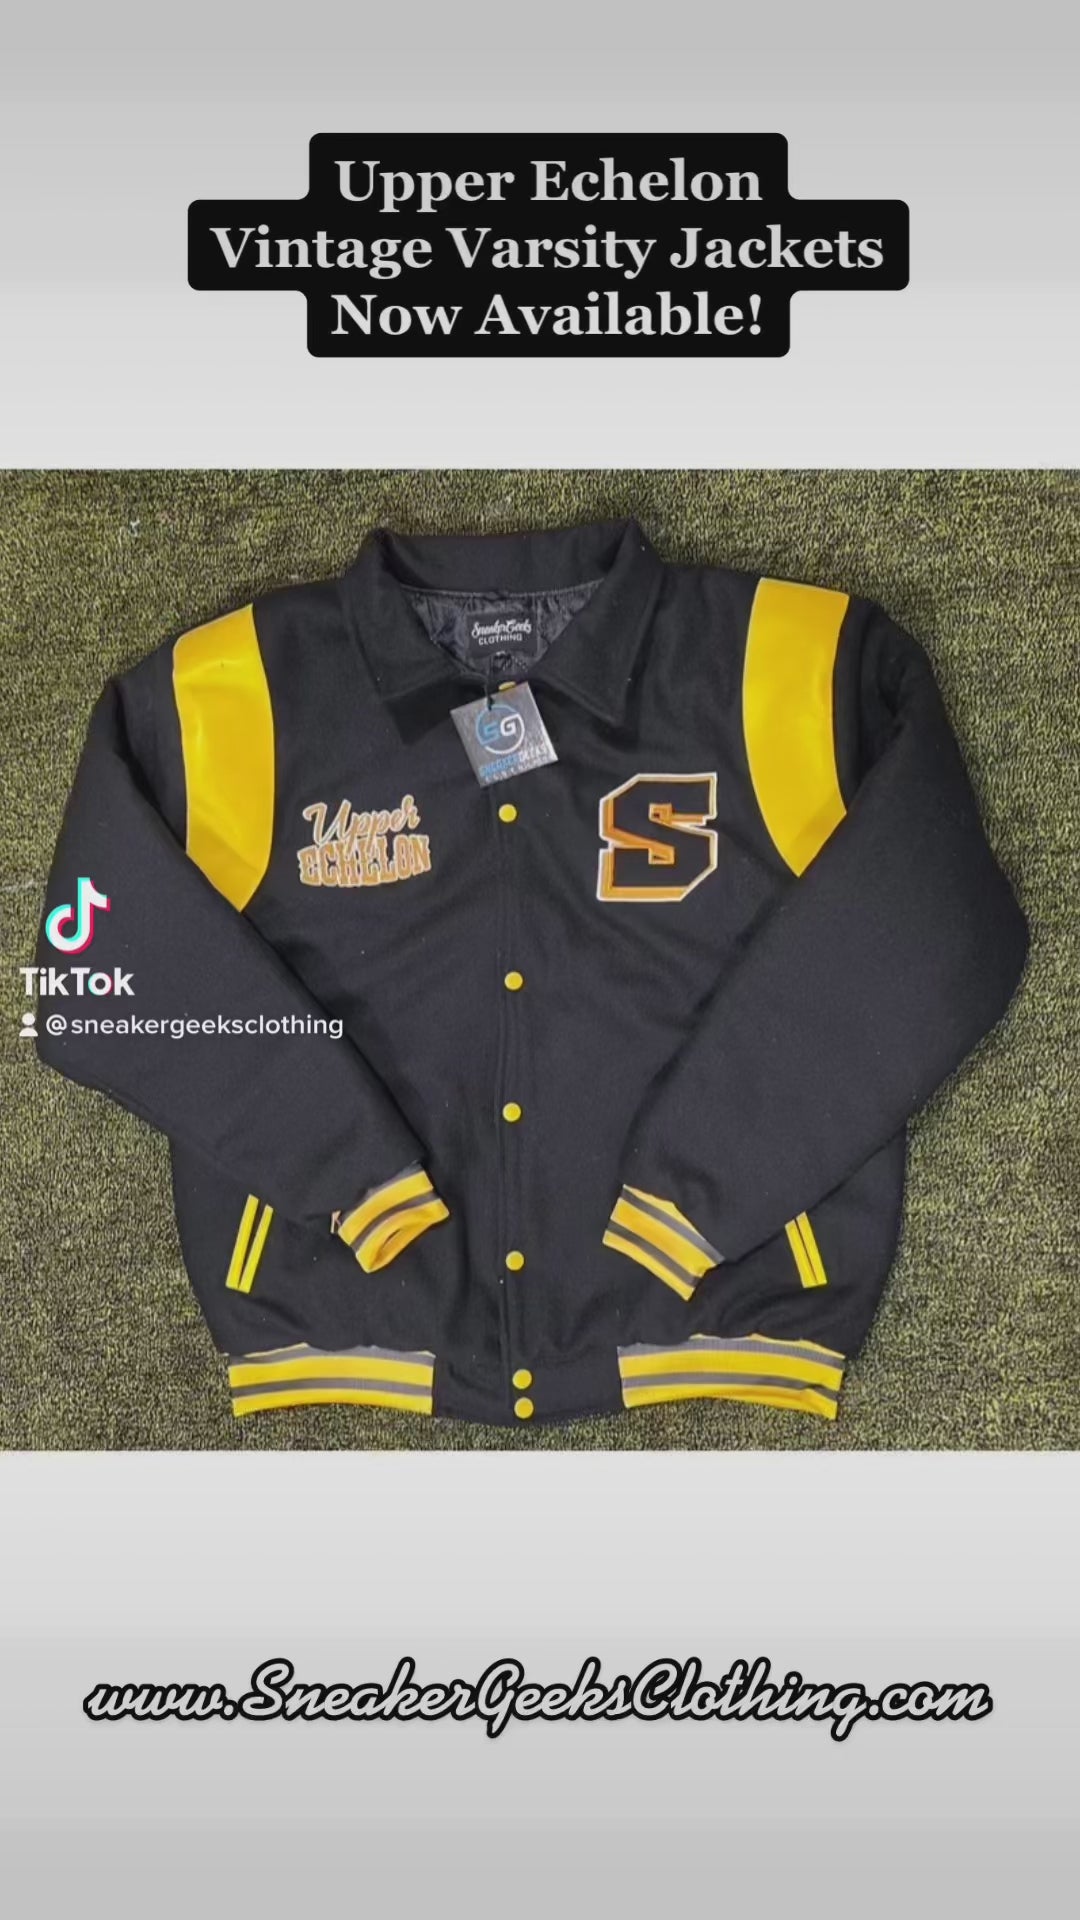 Upper Echelon Vintage Varsity Jacket to match the Retro Jordan 6UNC sneakers